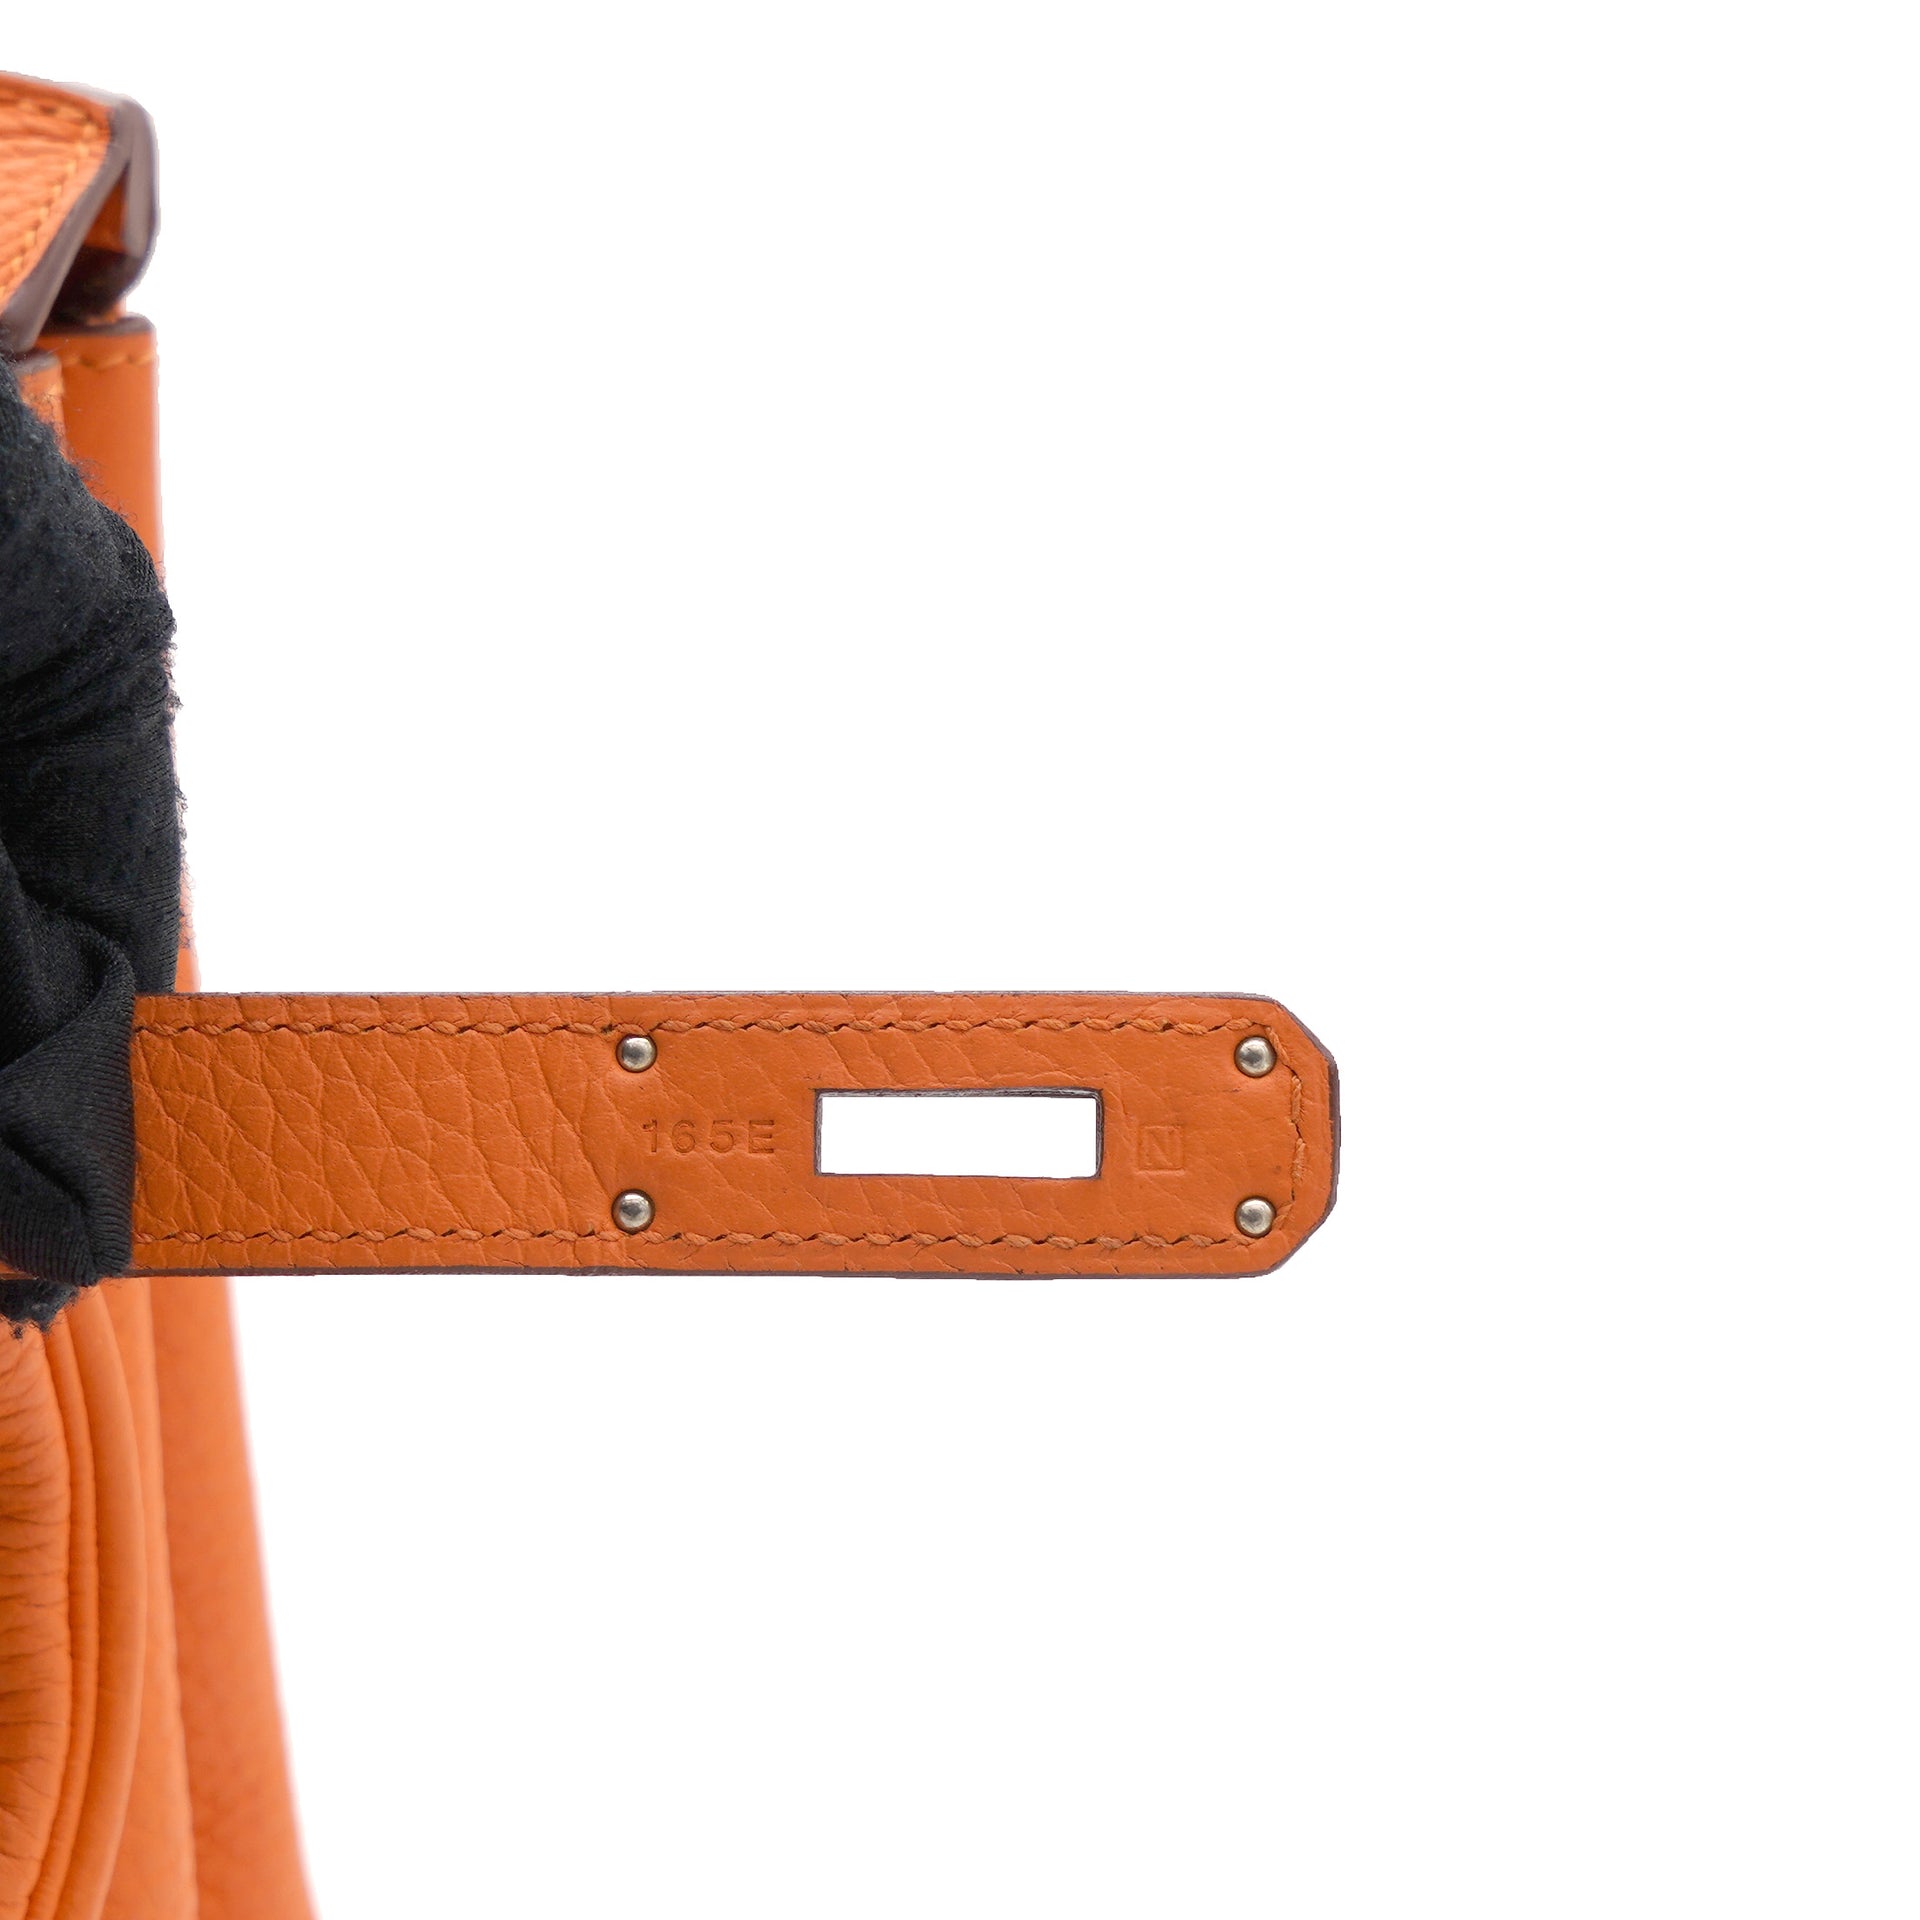 Orange Taurillon Clemence Leather Palladium Hardware Birkin 30 Bag